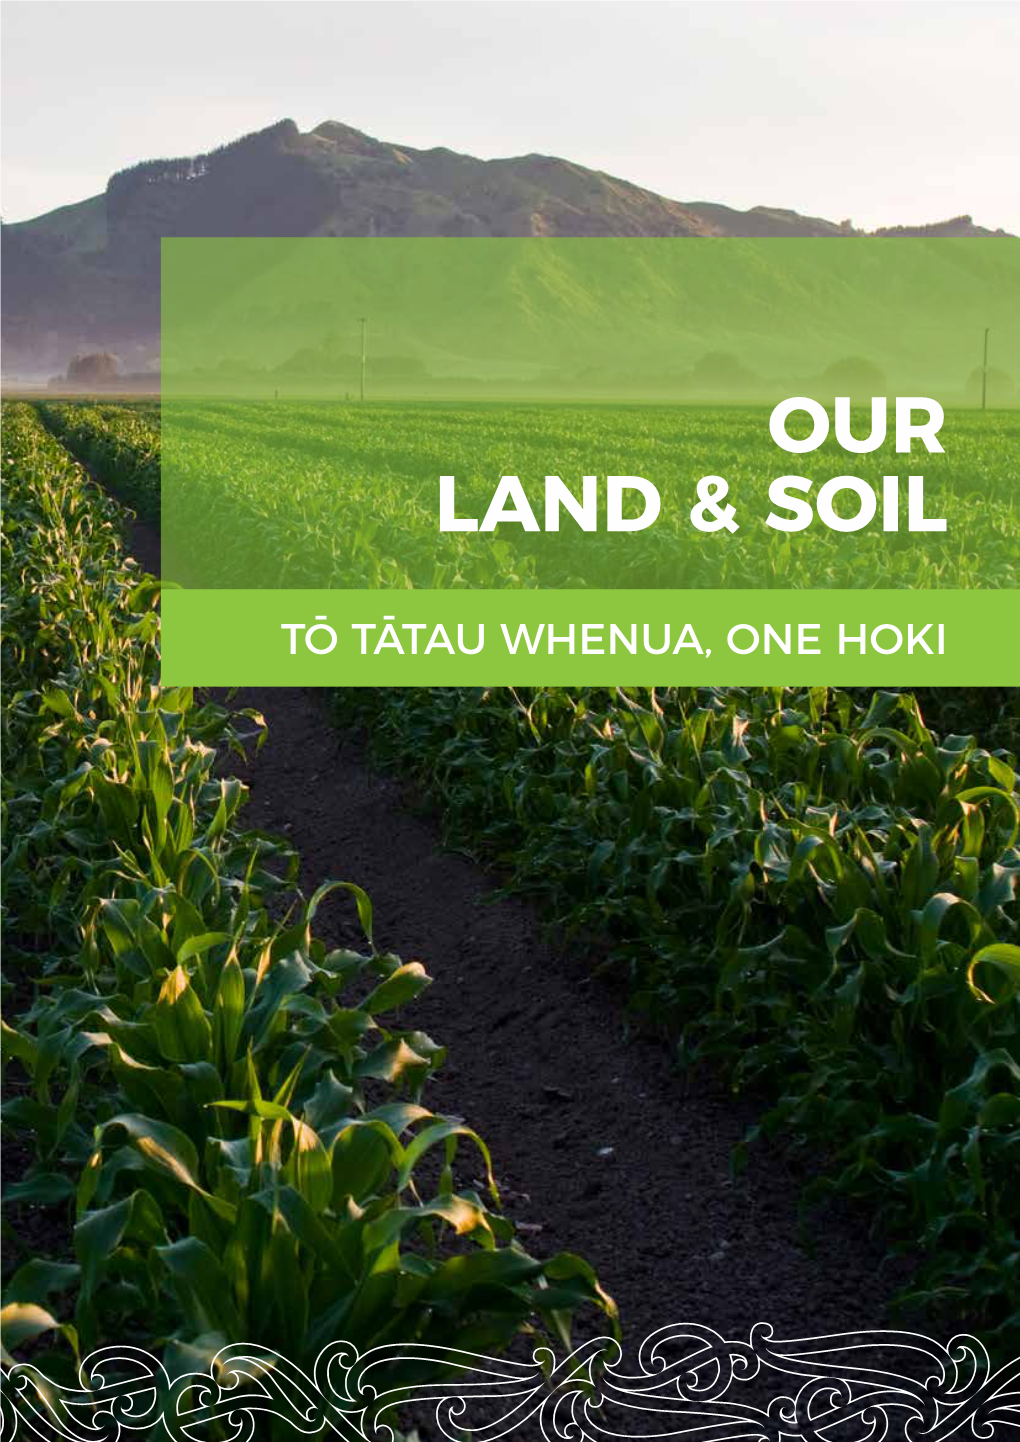 Our Land & Soil